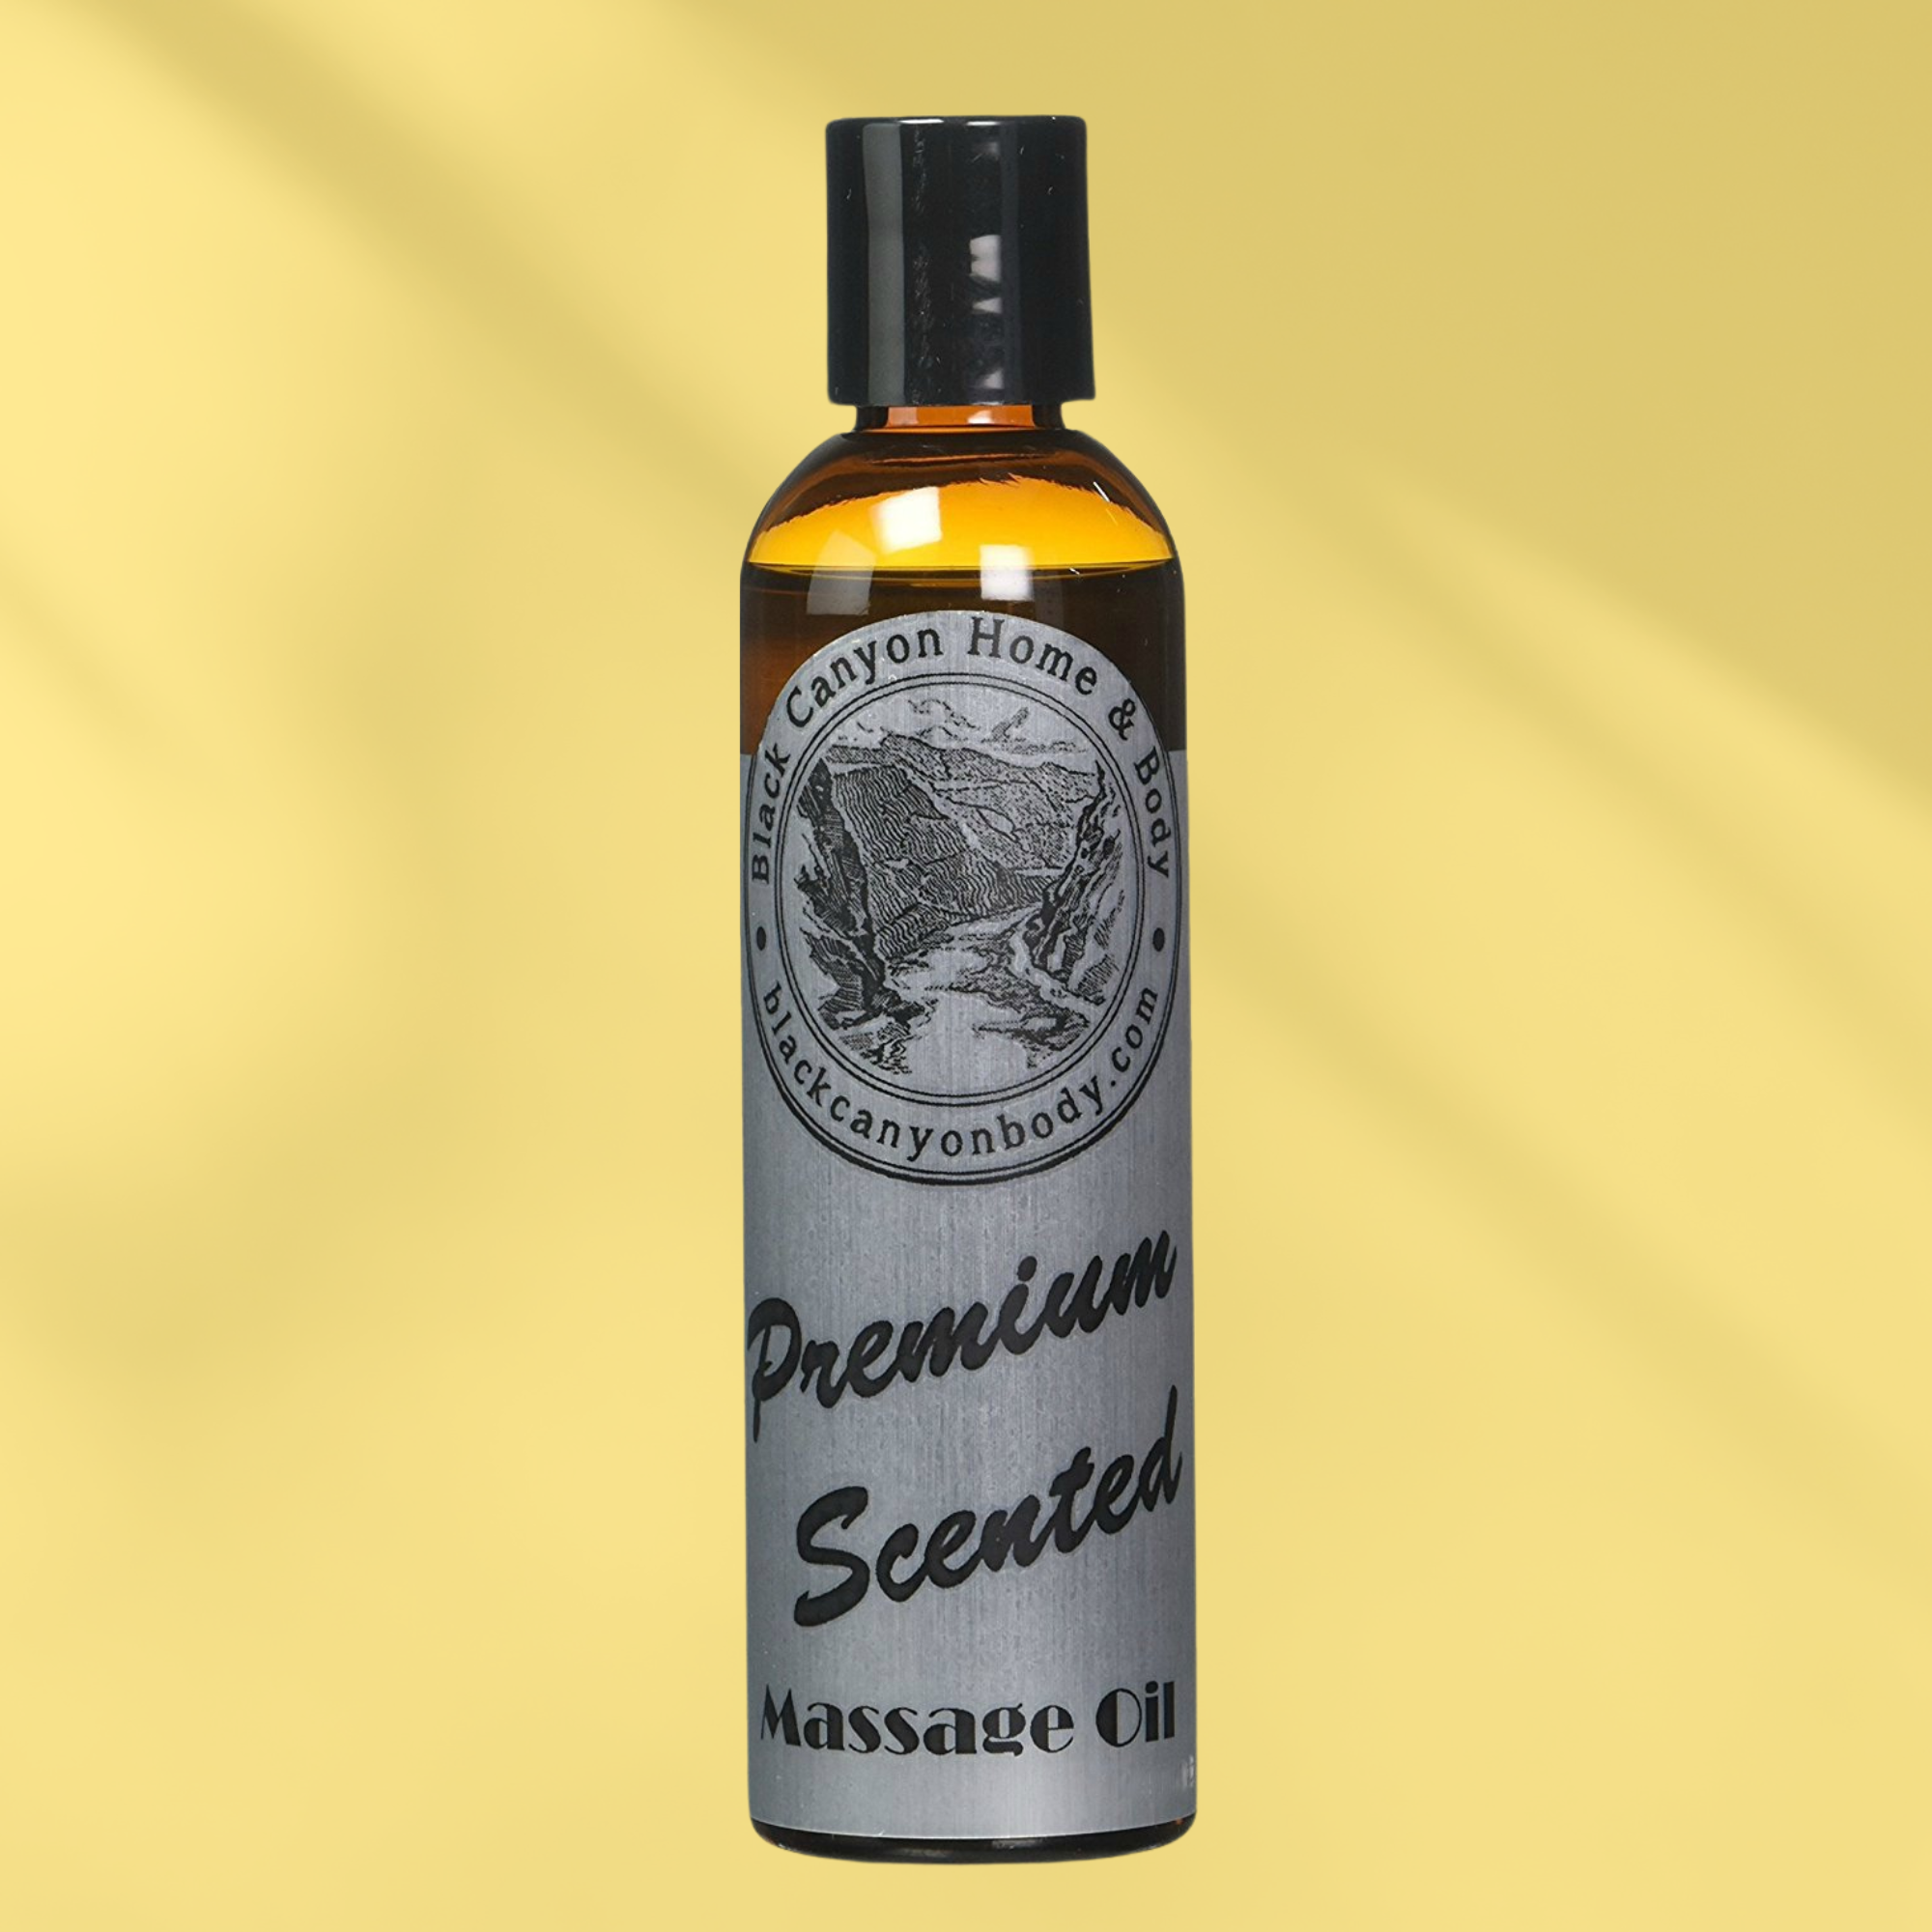 Black Canyon Poinsettia Scented Massage Oil